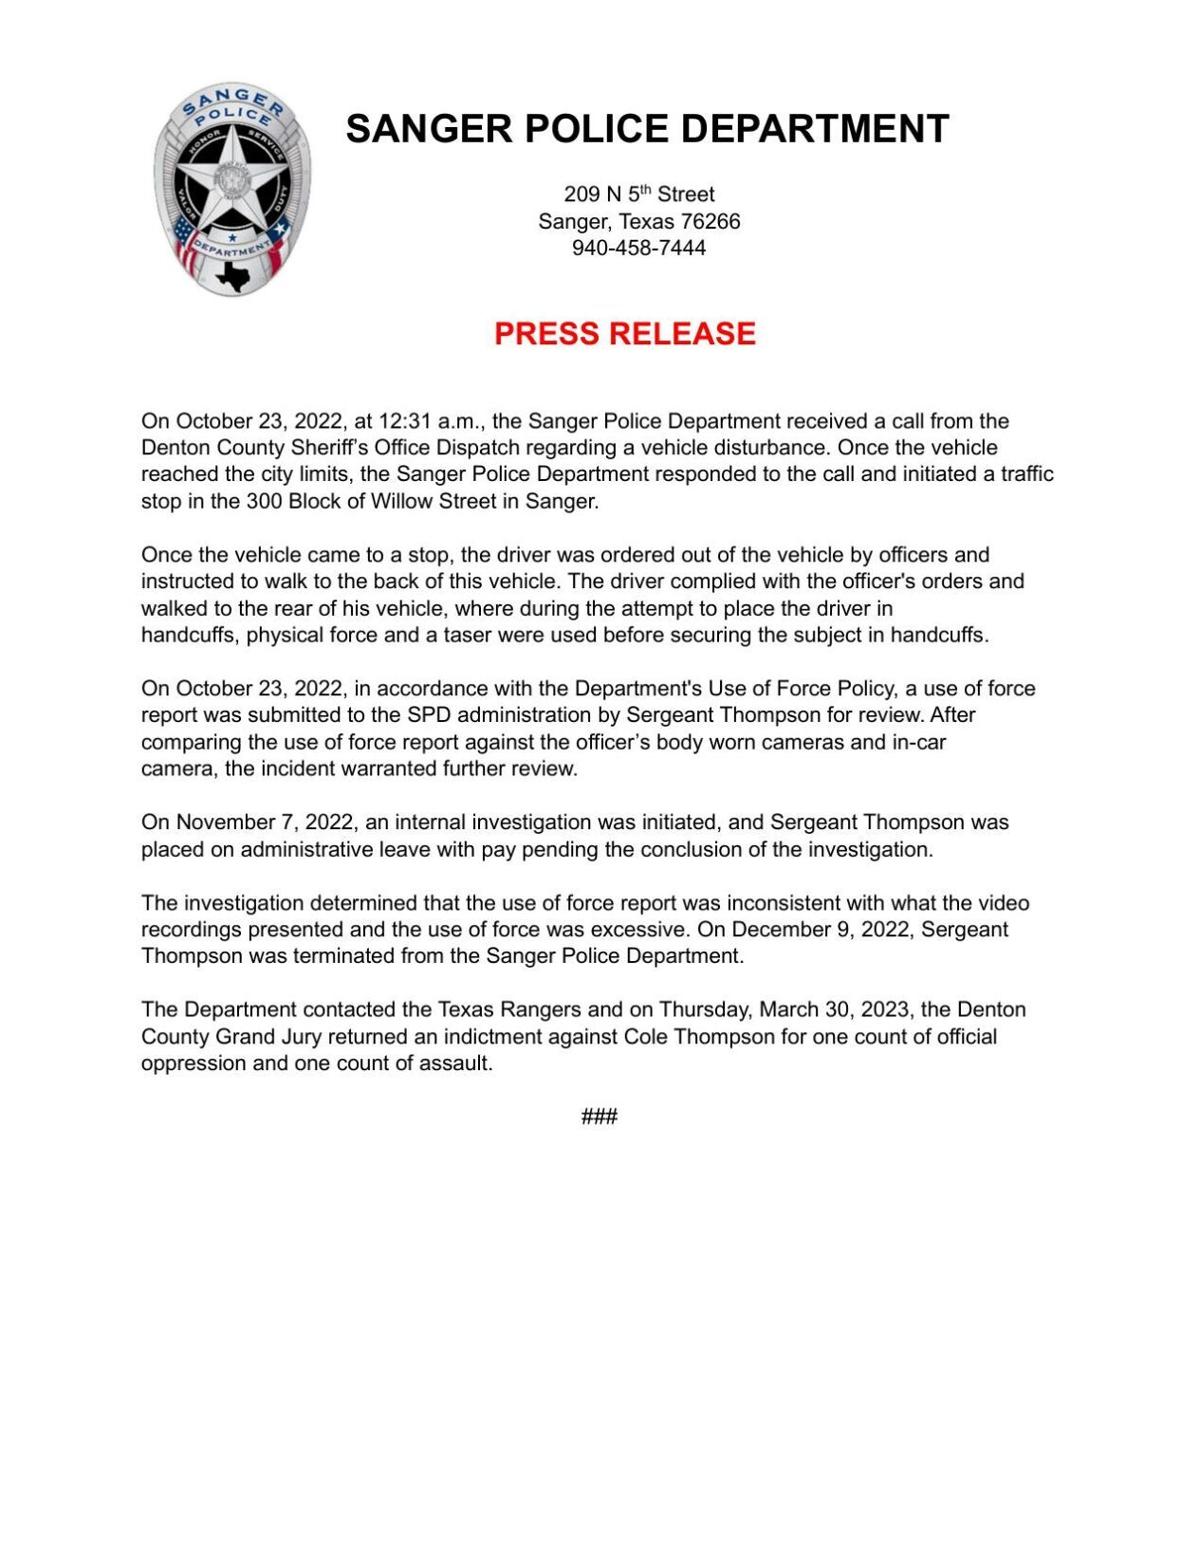 Sanger Police Department press release